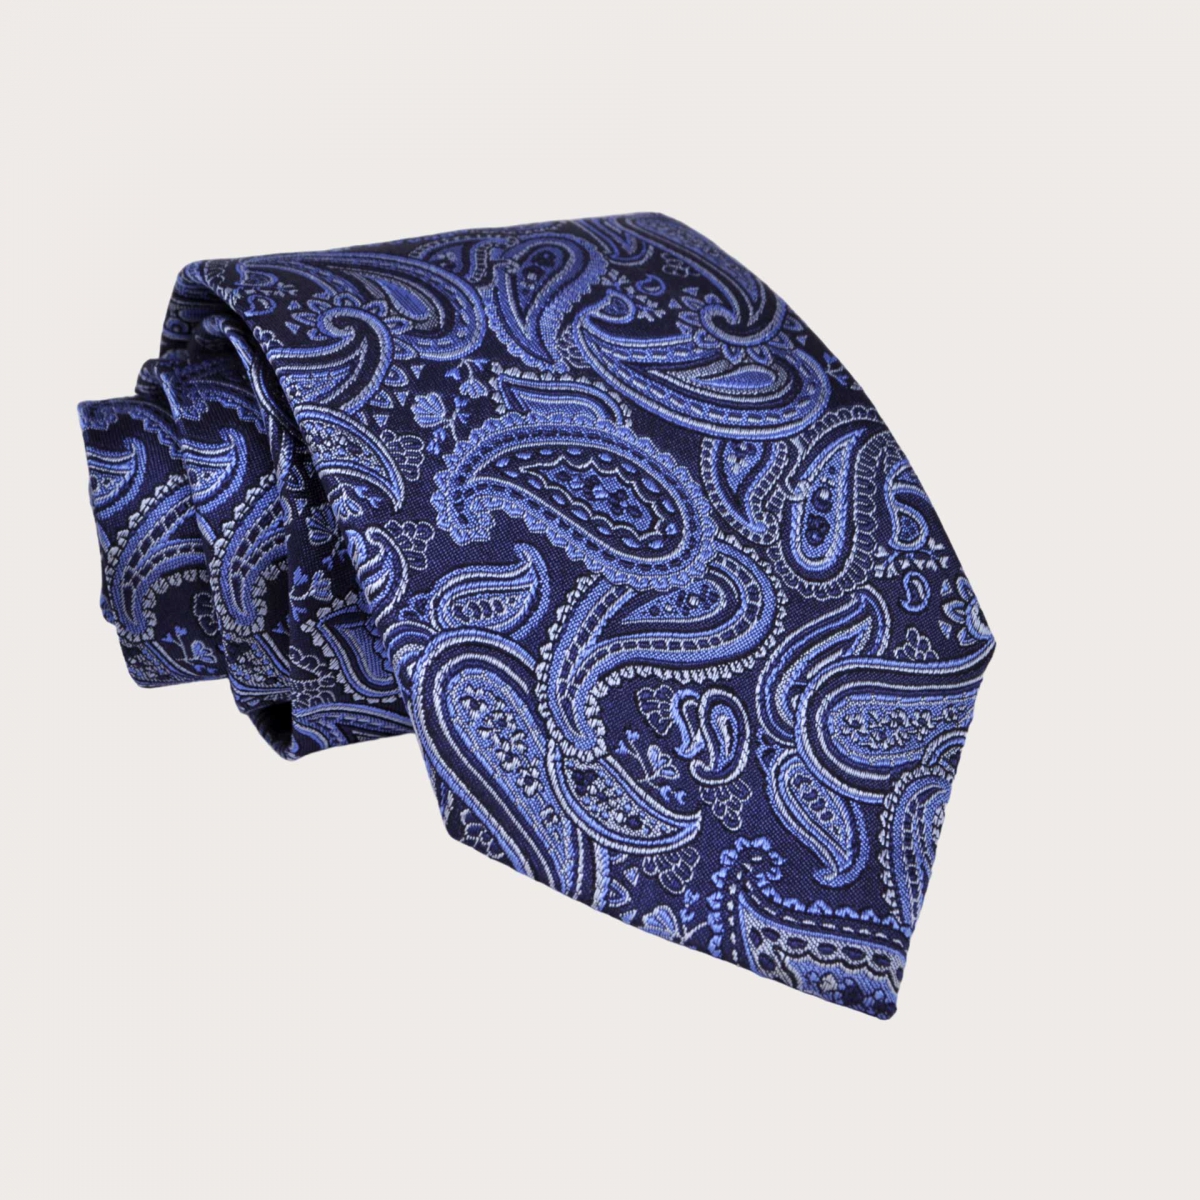 BRUCLE Blaue Paisley-Krawatte für Herren aus Jacquard-Seide